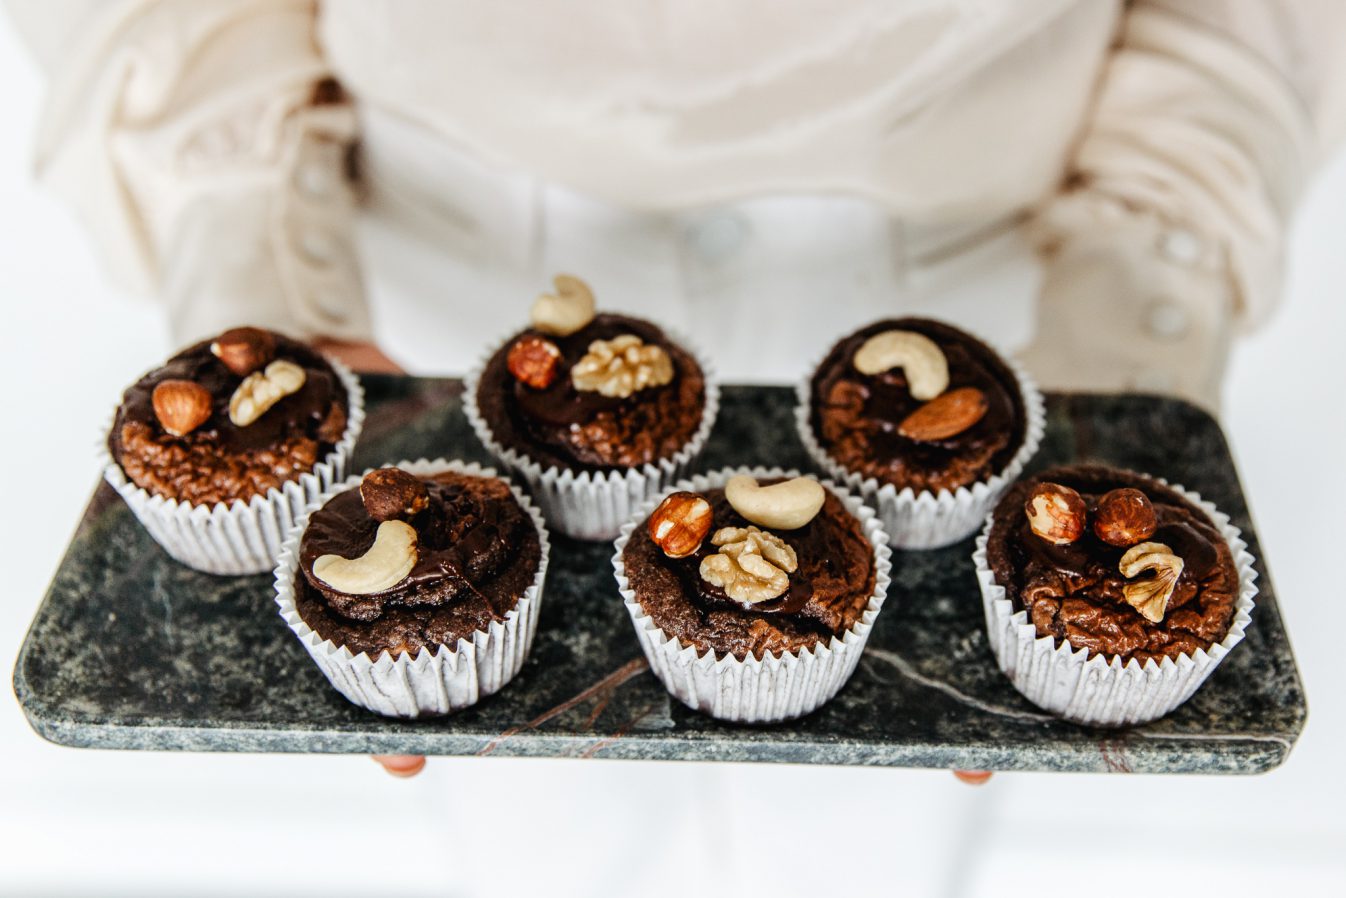 Spiksplinternieuw Healthy choco-nuts muffin madness | Foodie-ness FX-45